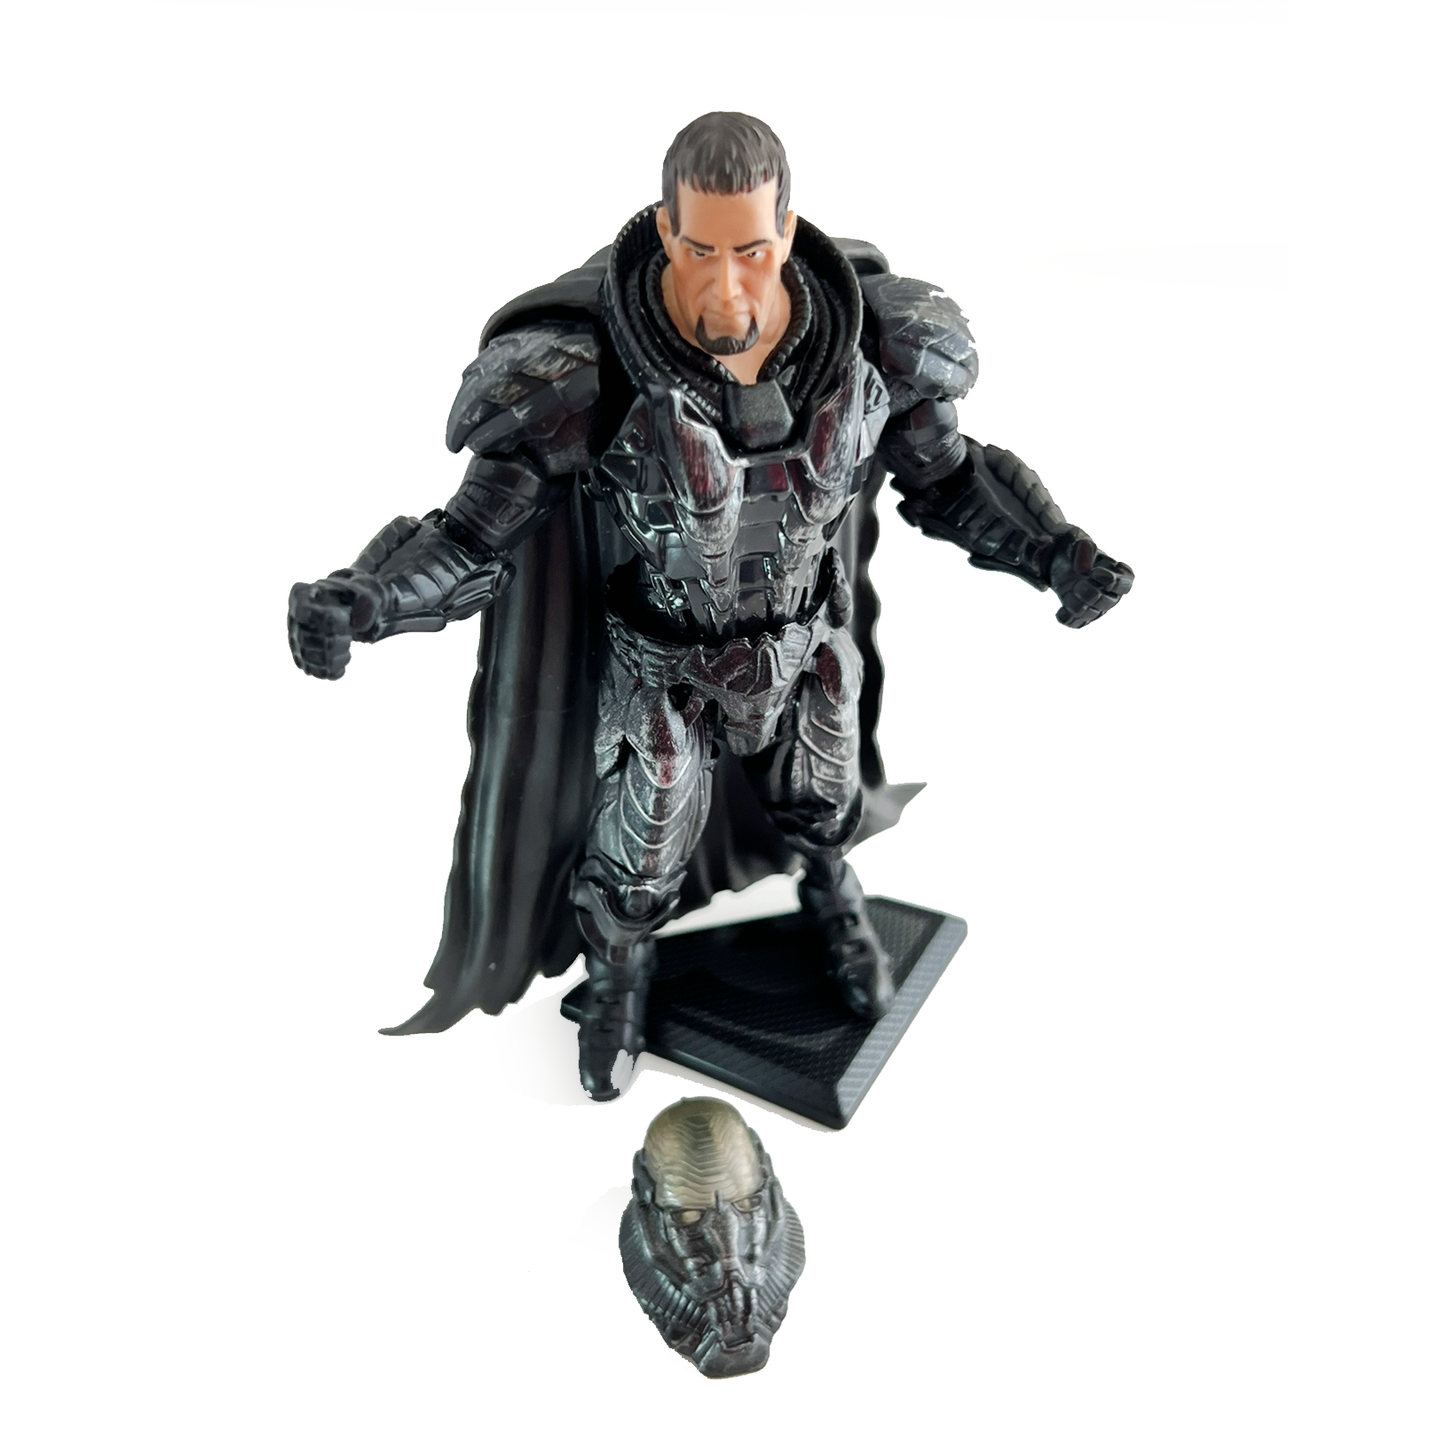 Gen, Zod Superman Movie Action Figure. 6.5" Loose item